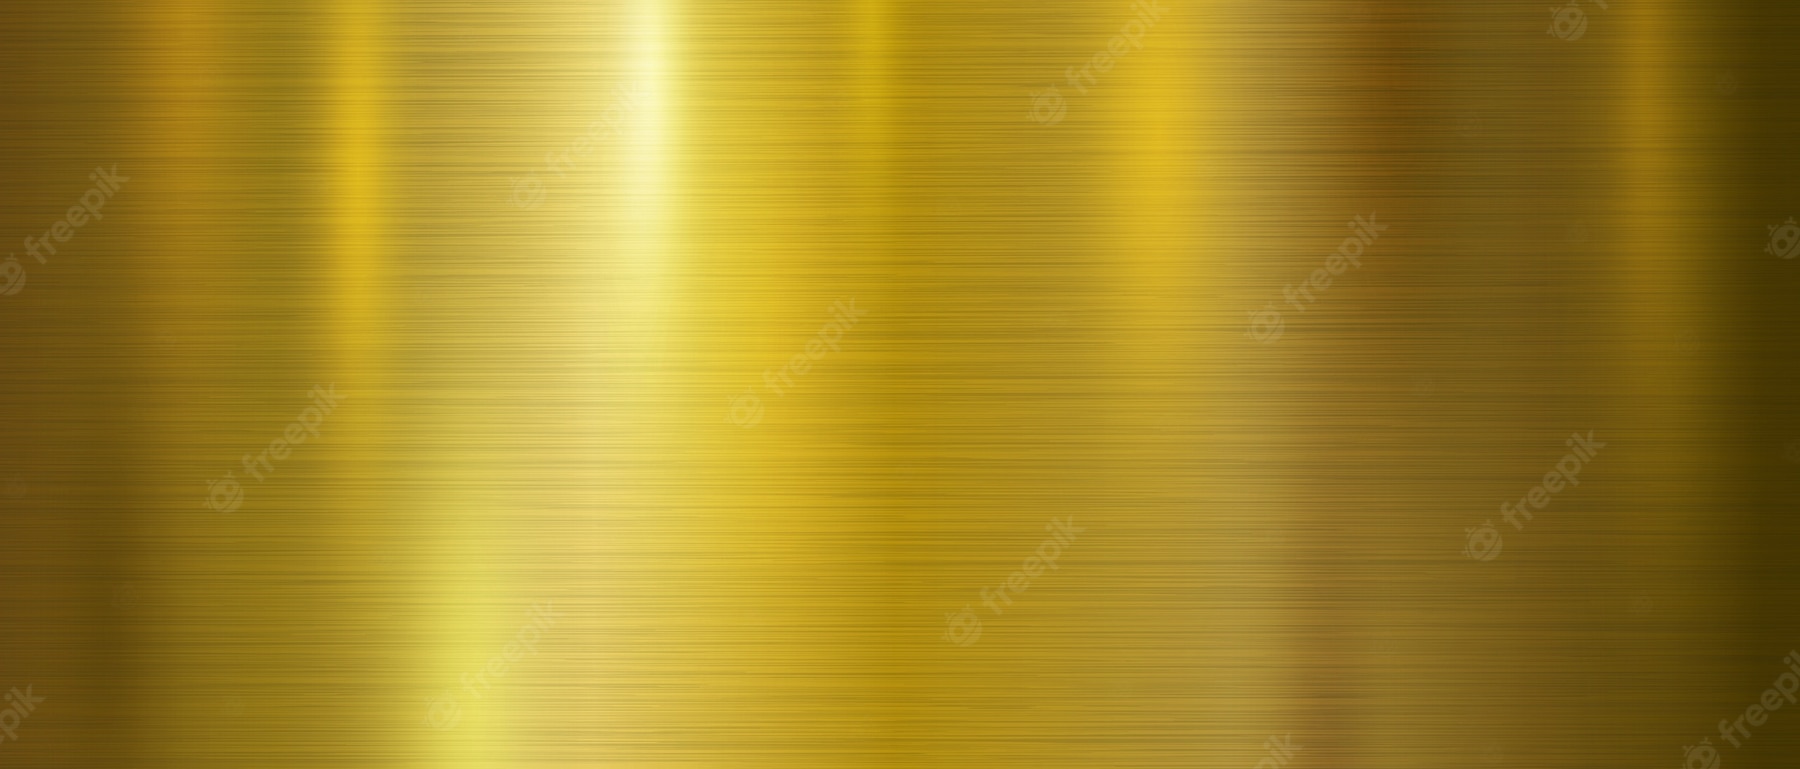 metallic background gold